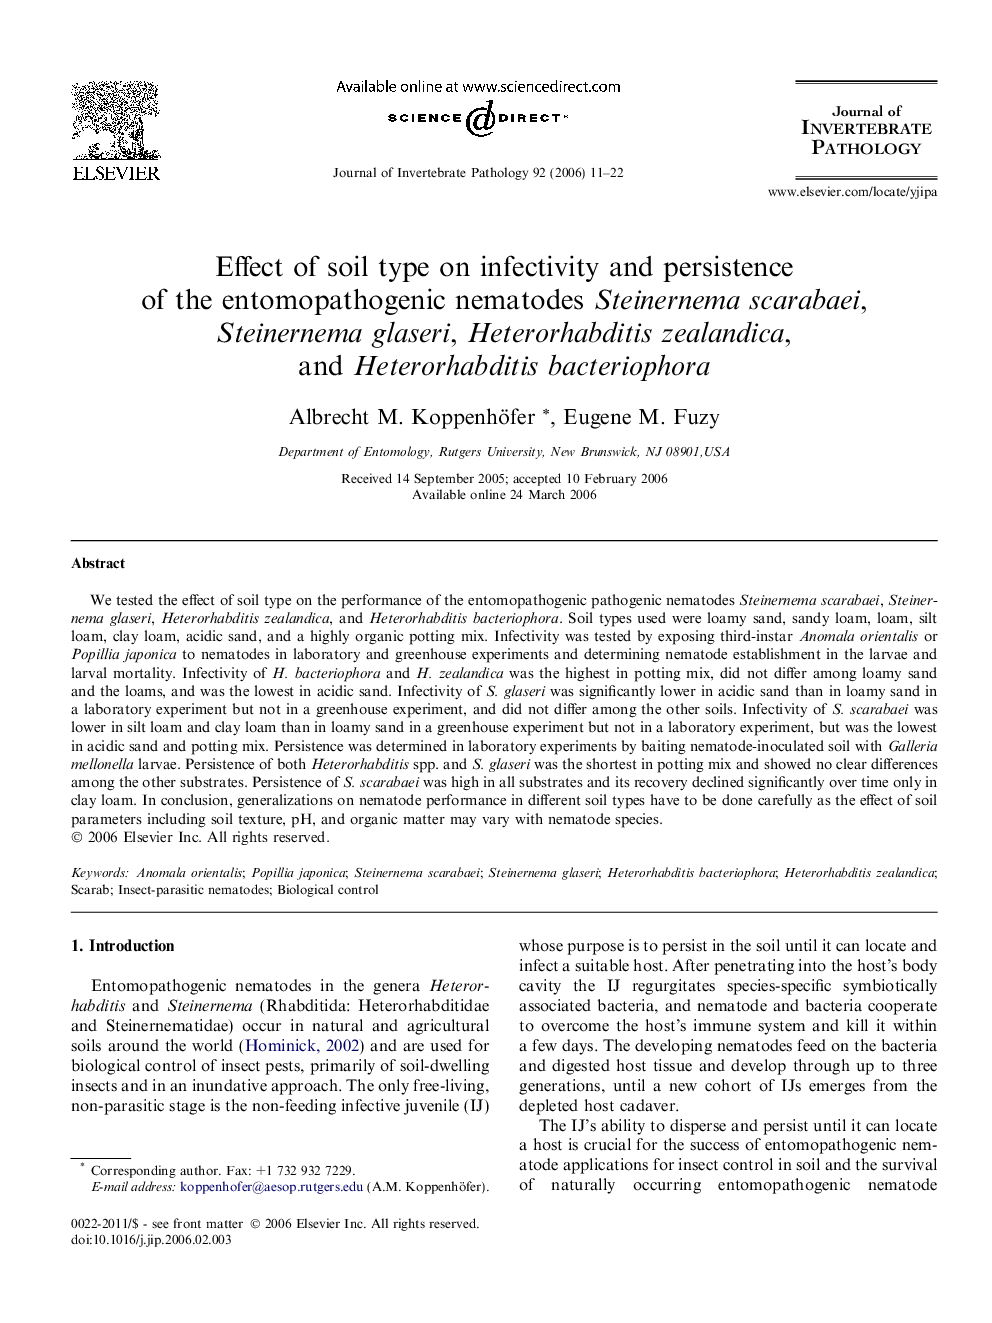 Effect of soil type on infectivity and persistence of the entomopathogenic nematodes Steinernema scarabaei, Steinernema glaseri, Heterorhabditis zealandica, and Heterorhabditis bacteriophora